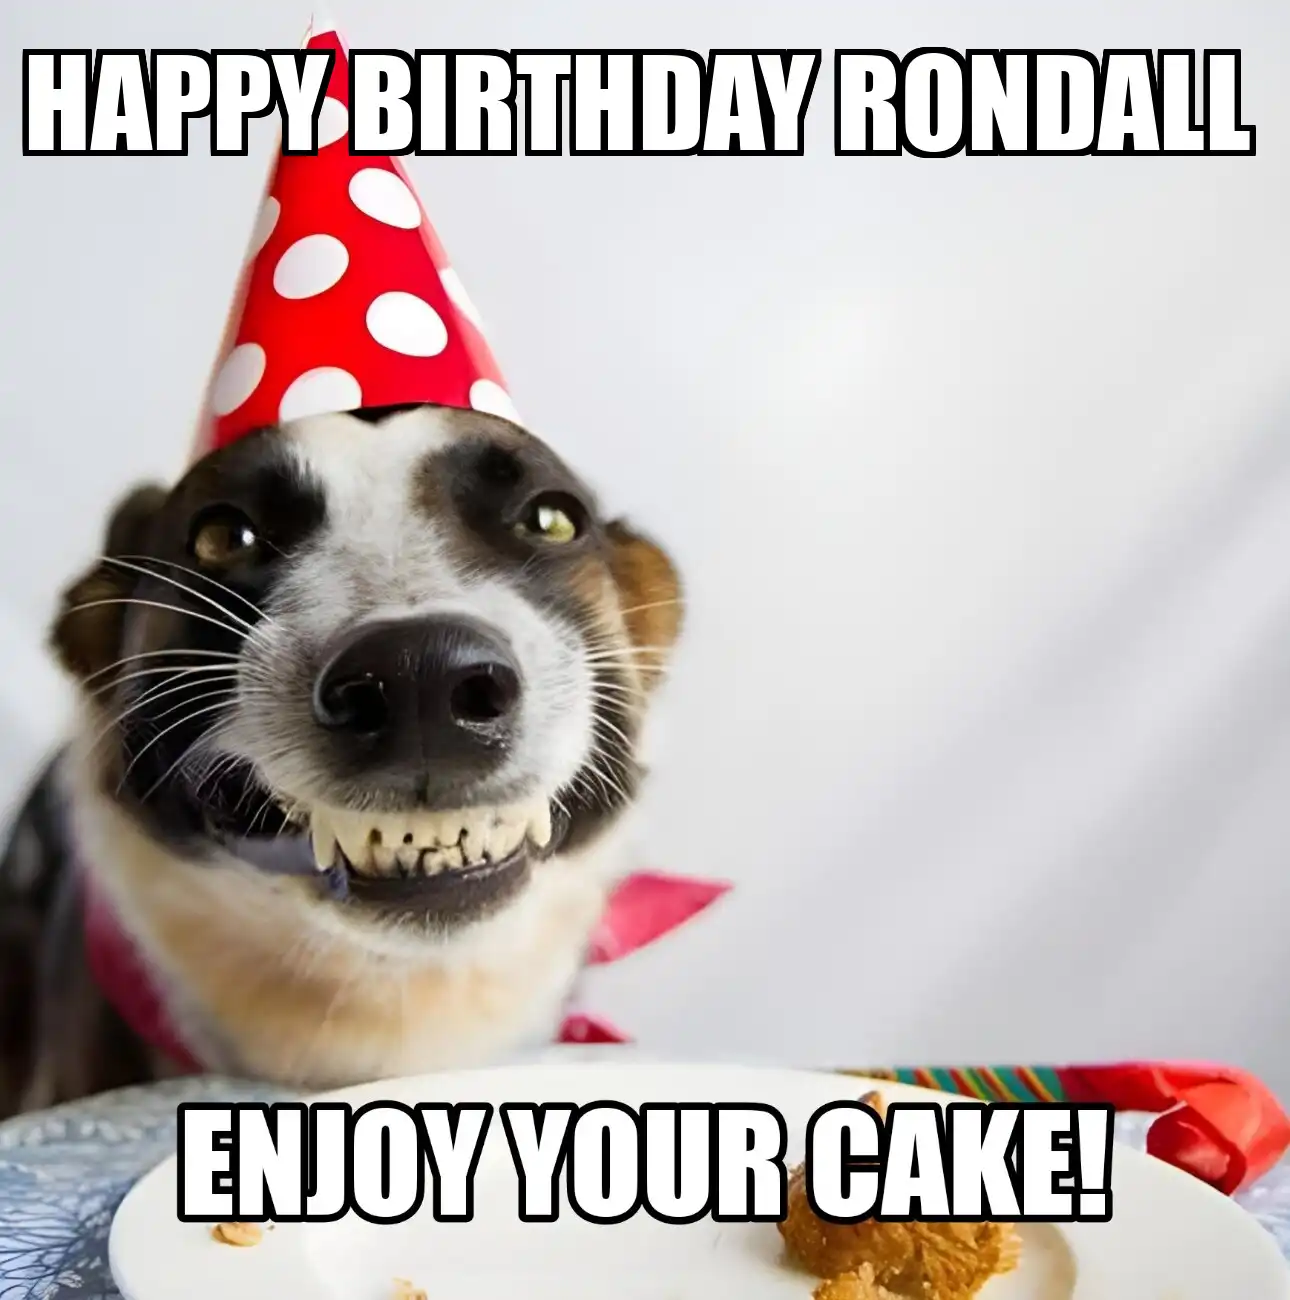 Happy Birthday Rondall Enjoy Your Cake Dog Meme